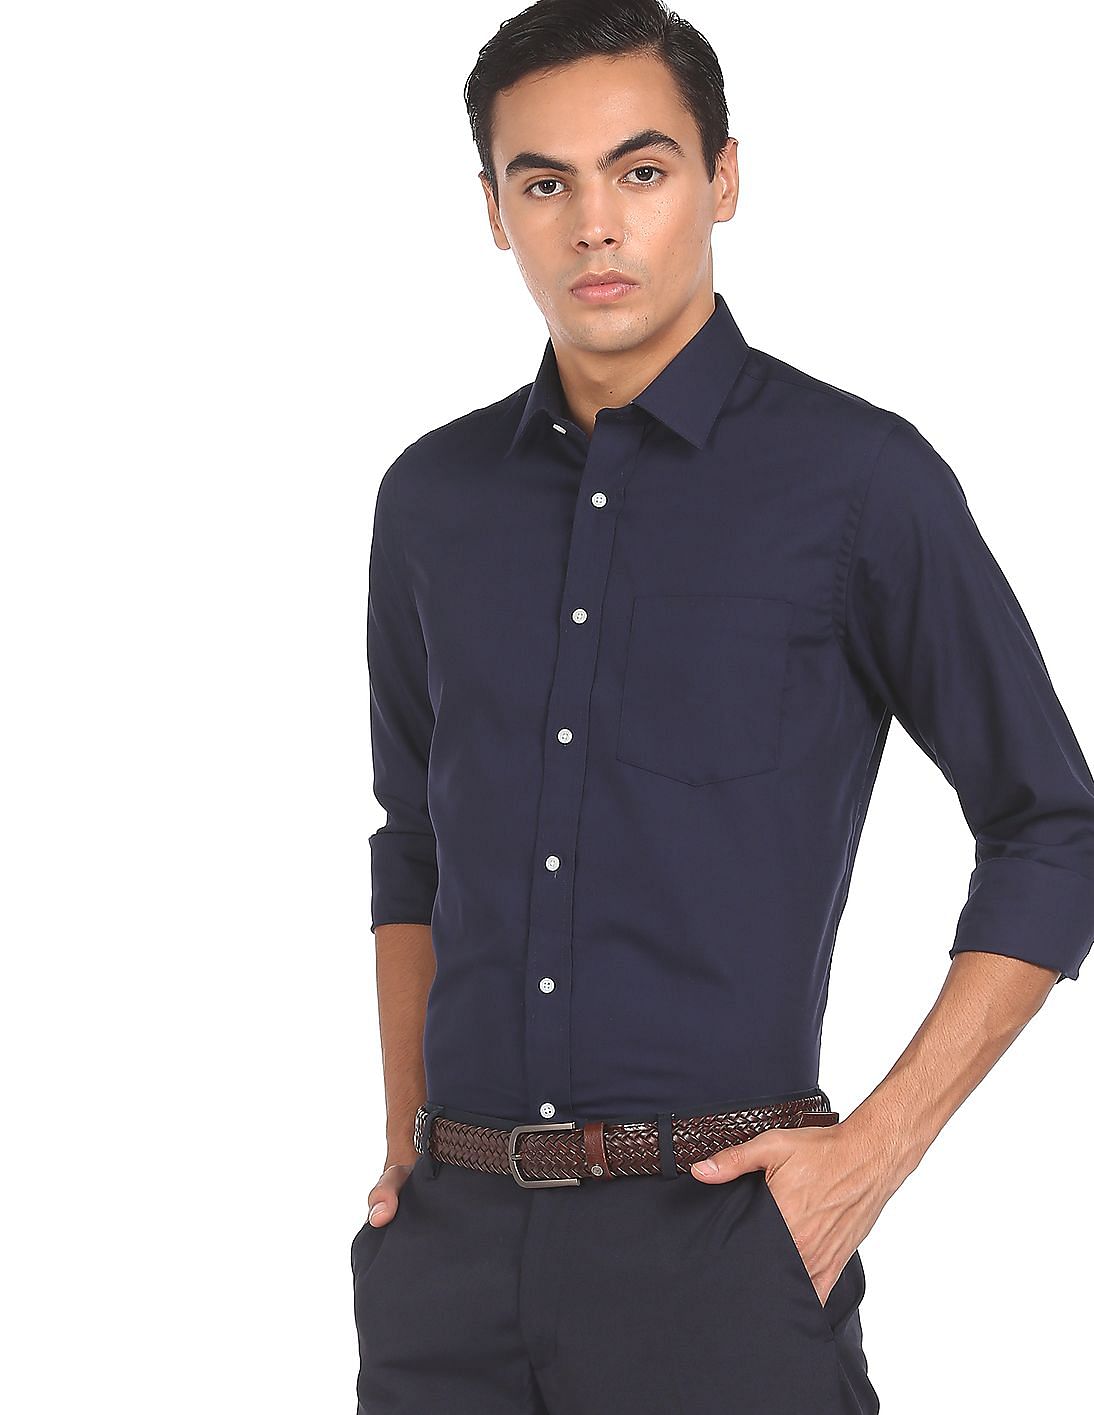 Buy Arrow Solid Cotton Formal Shirt - NNNOW.com